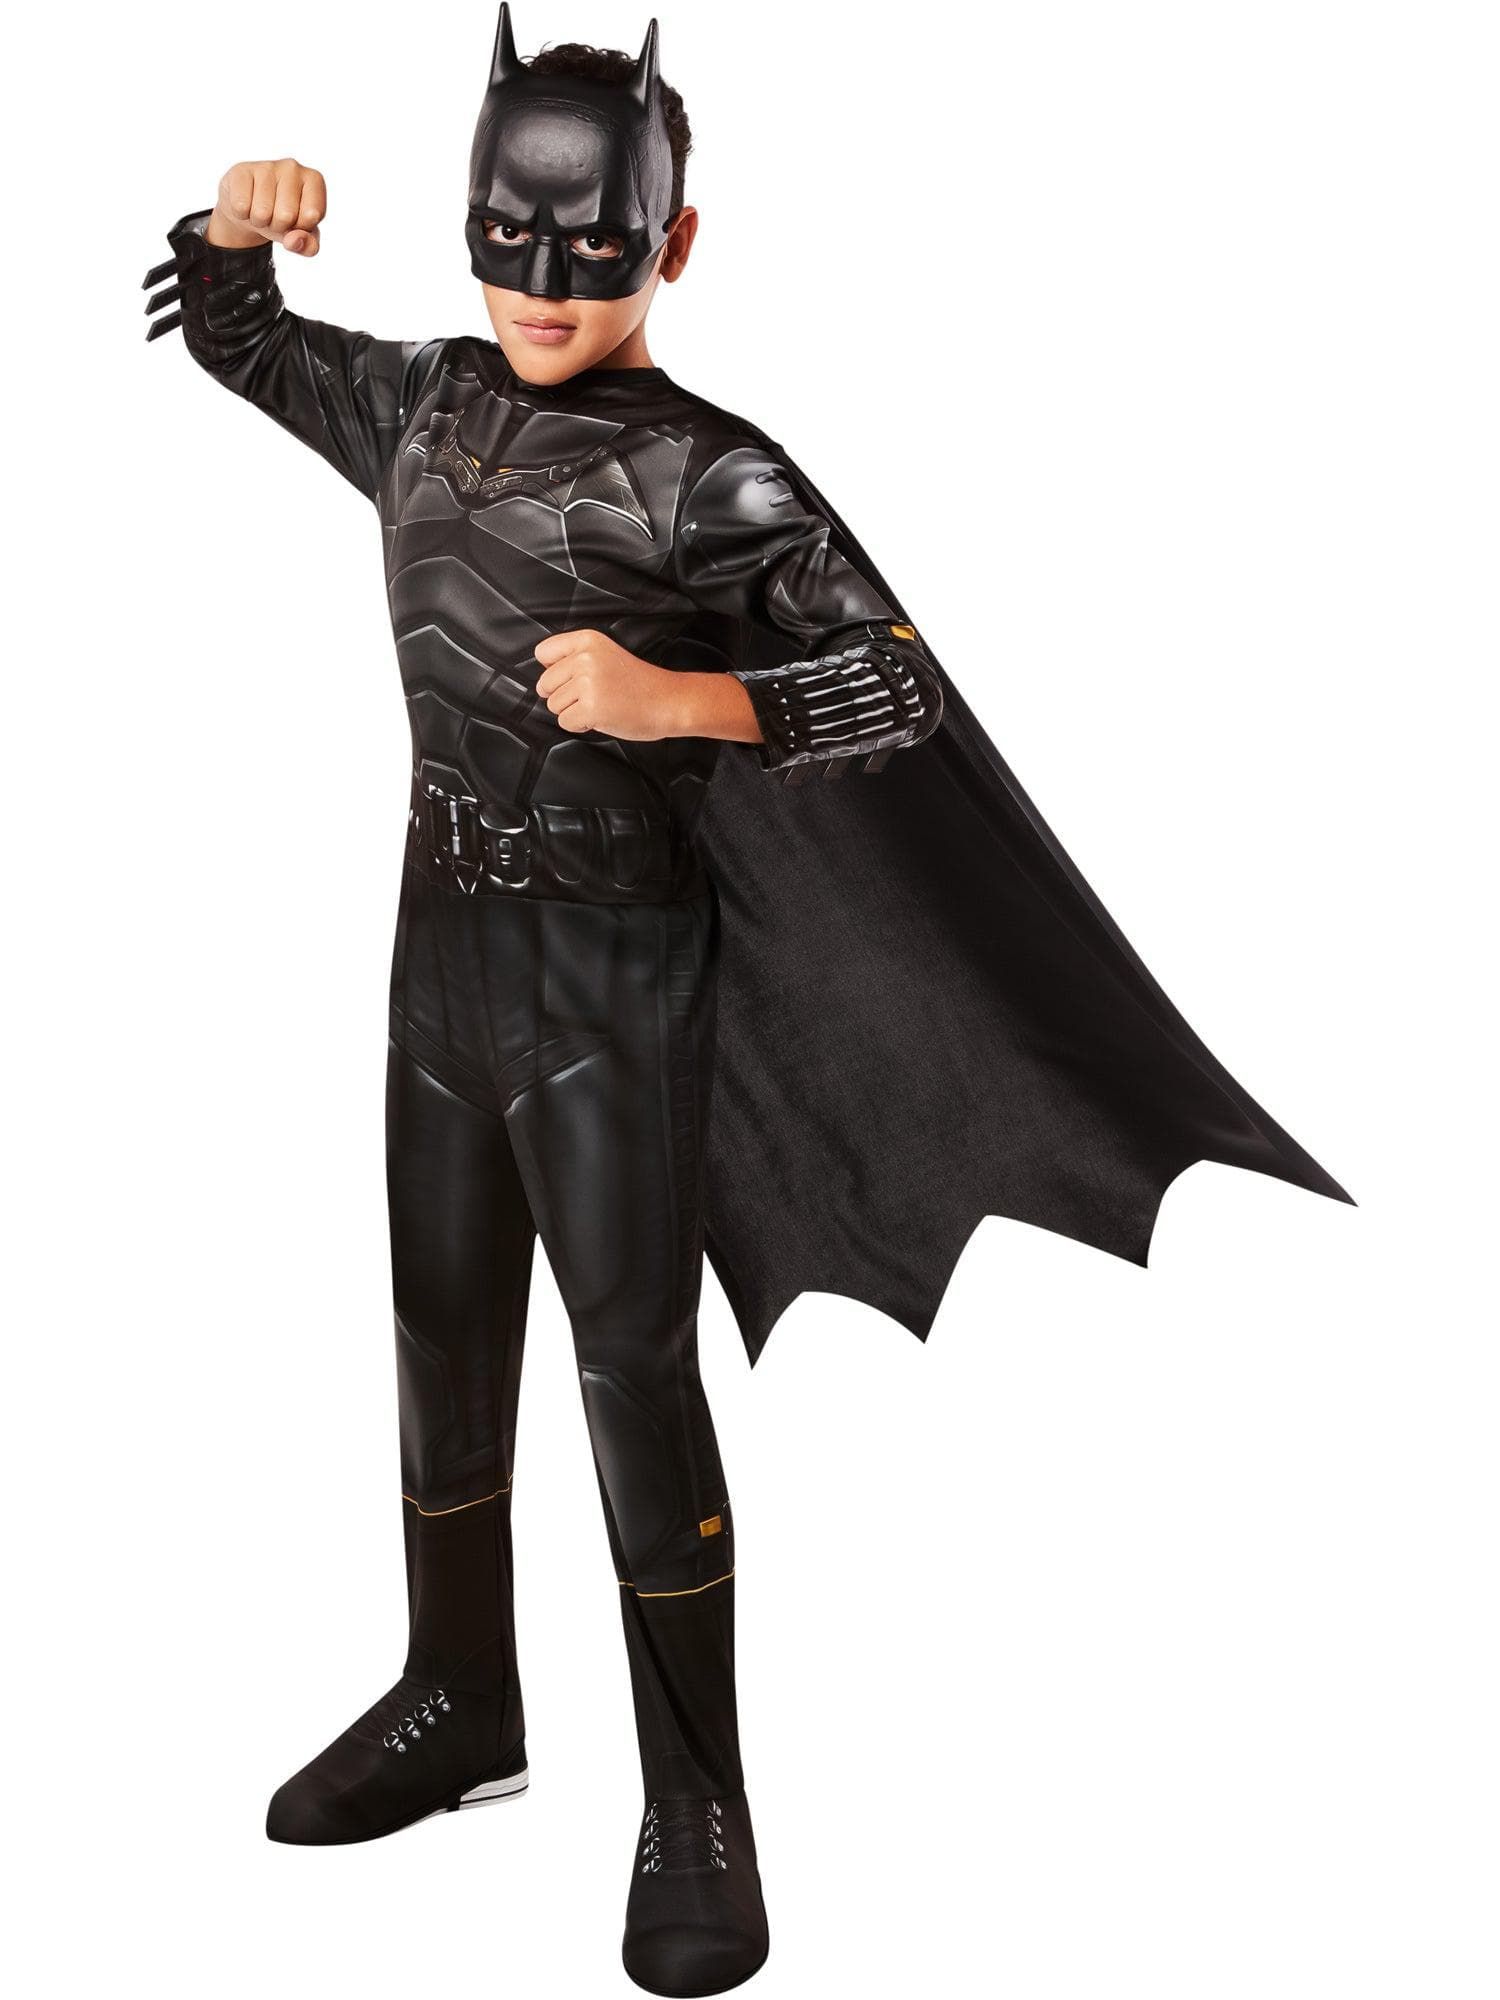 The Batman Kids Costume - costumes.com